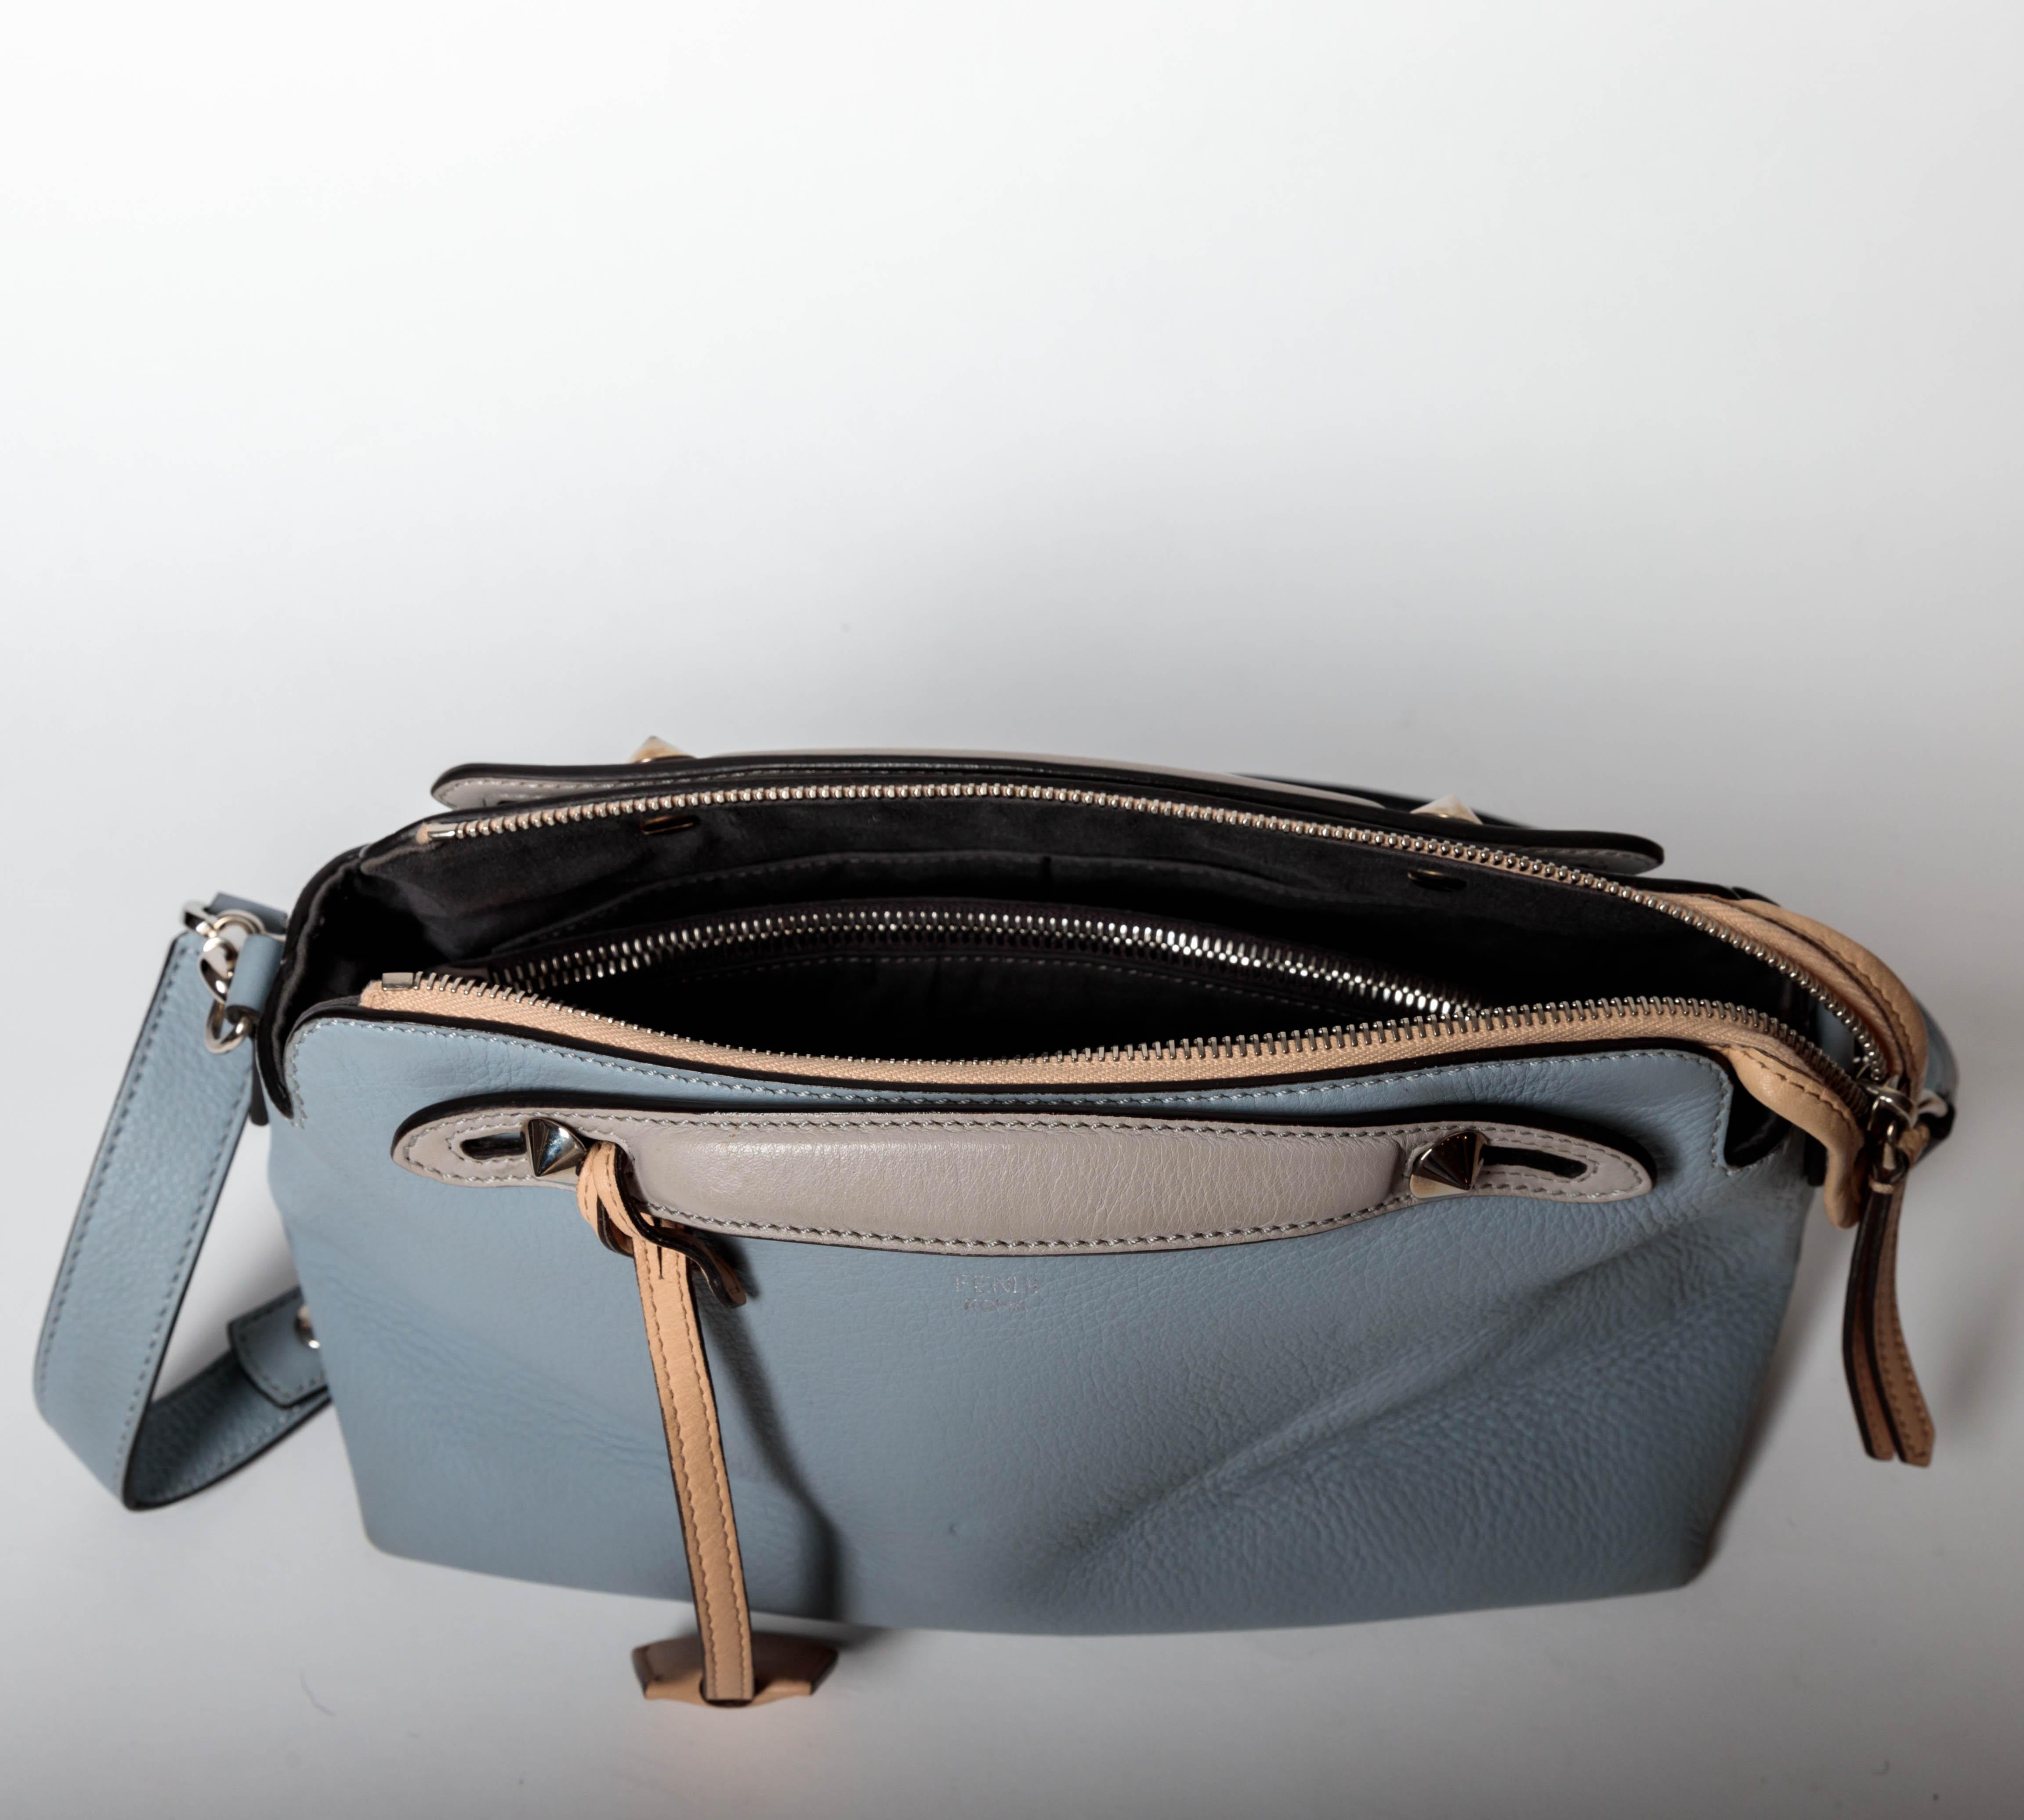 Fendi Top Handle Ice Blue Leather Bag with Detachable Shoulder Strap  For Sale 3